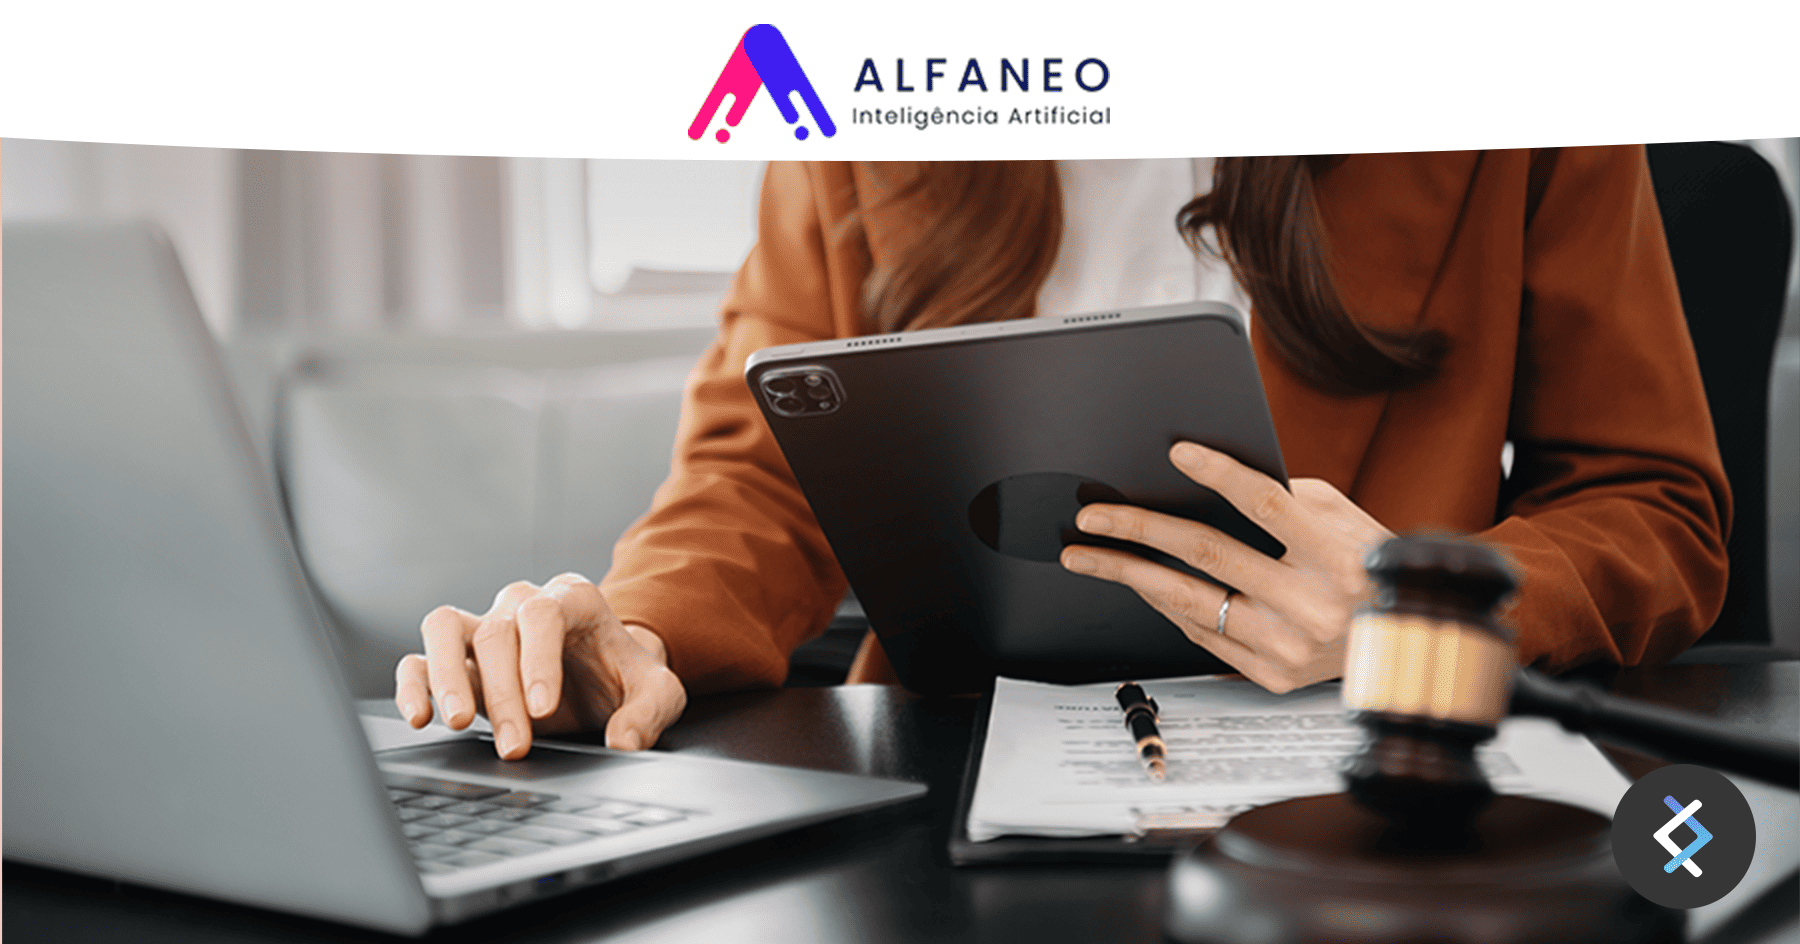 Alfaneo: Automating Legal Petition Generation Using GenAI